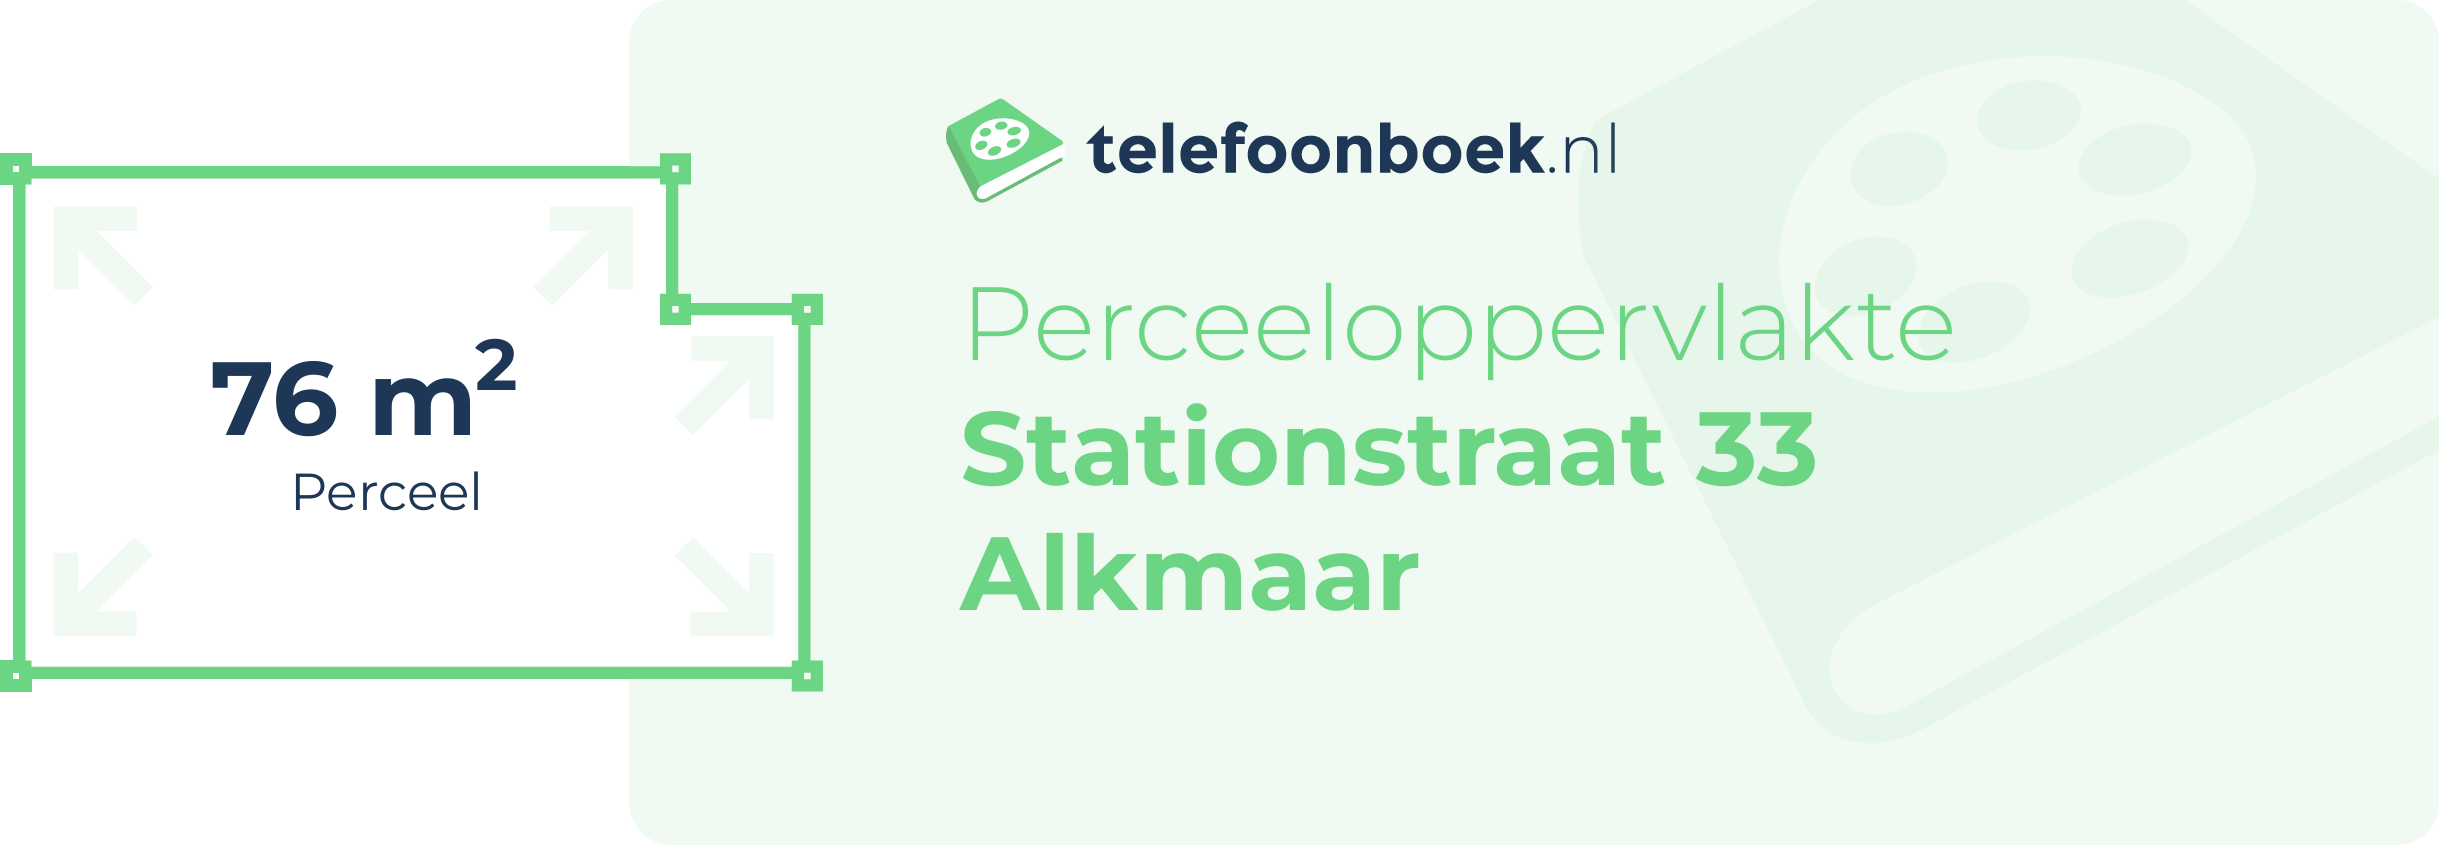 Perceeloppervlakte Stationstraat 33 Alkmaar